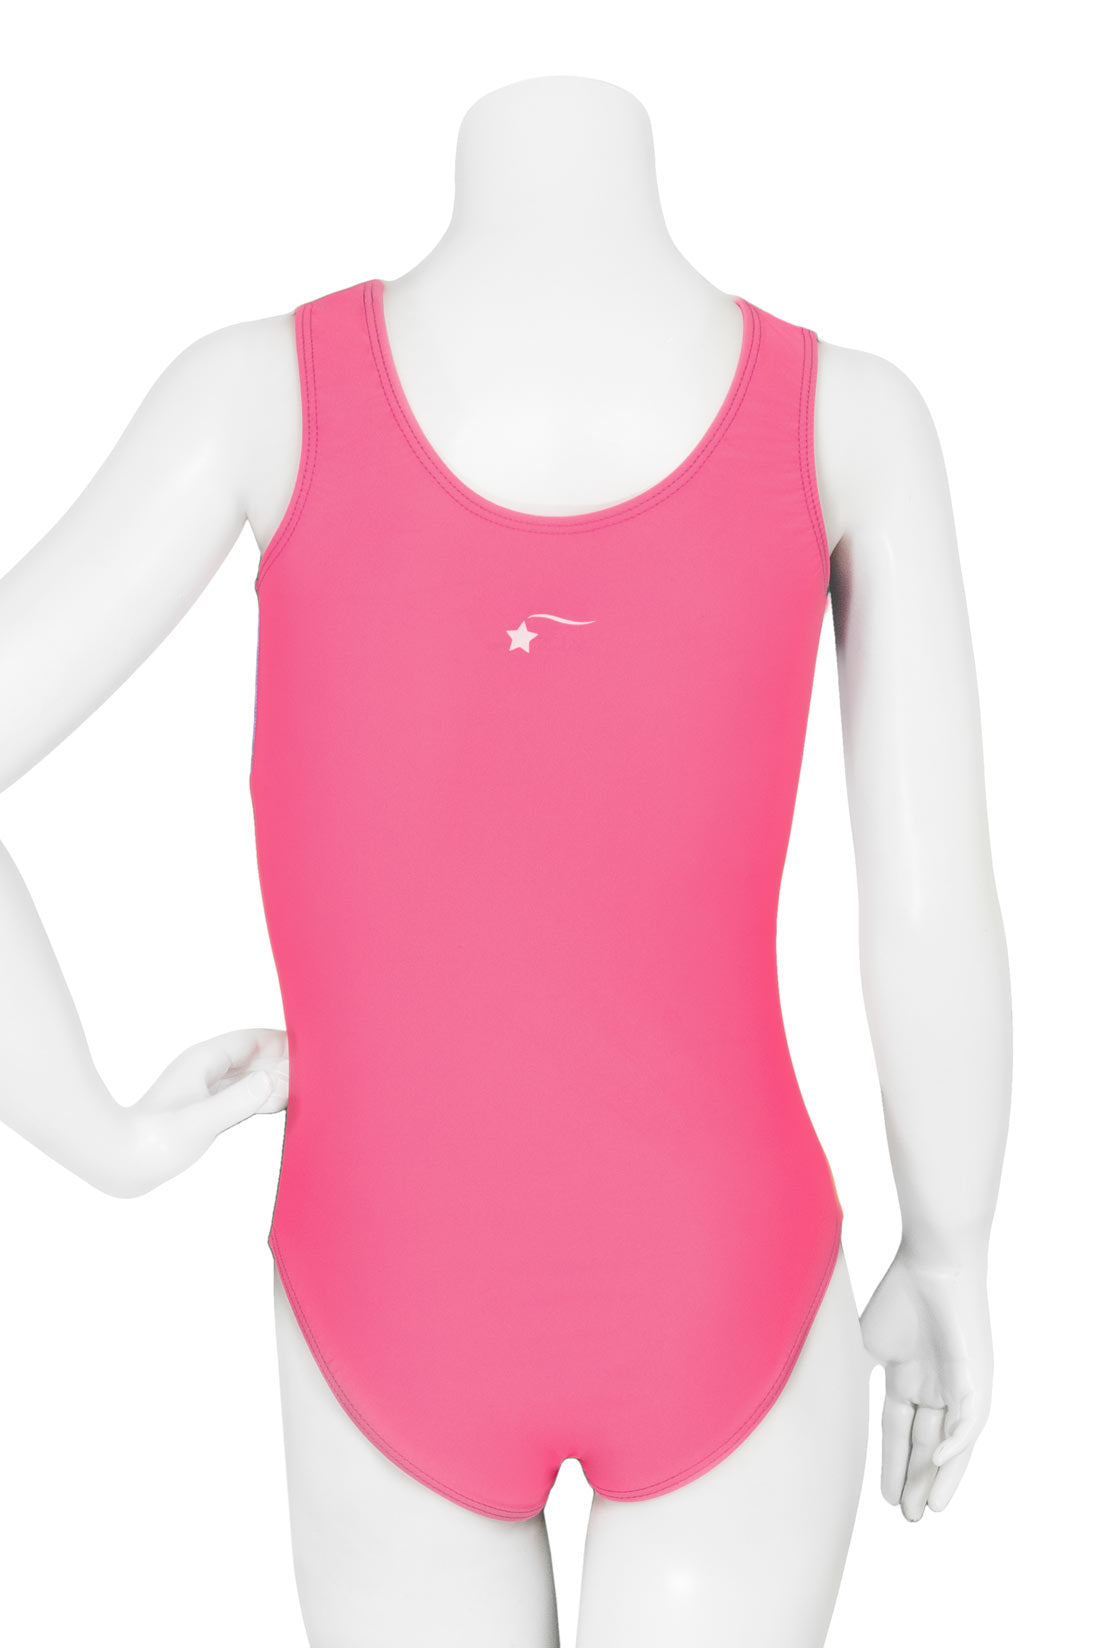 Ultra-soft pink workout leotard for girls' gymnastics, Destira, 2023